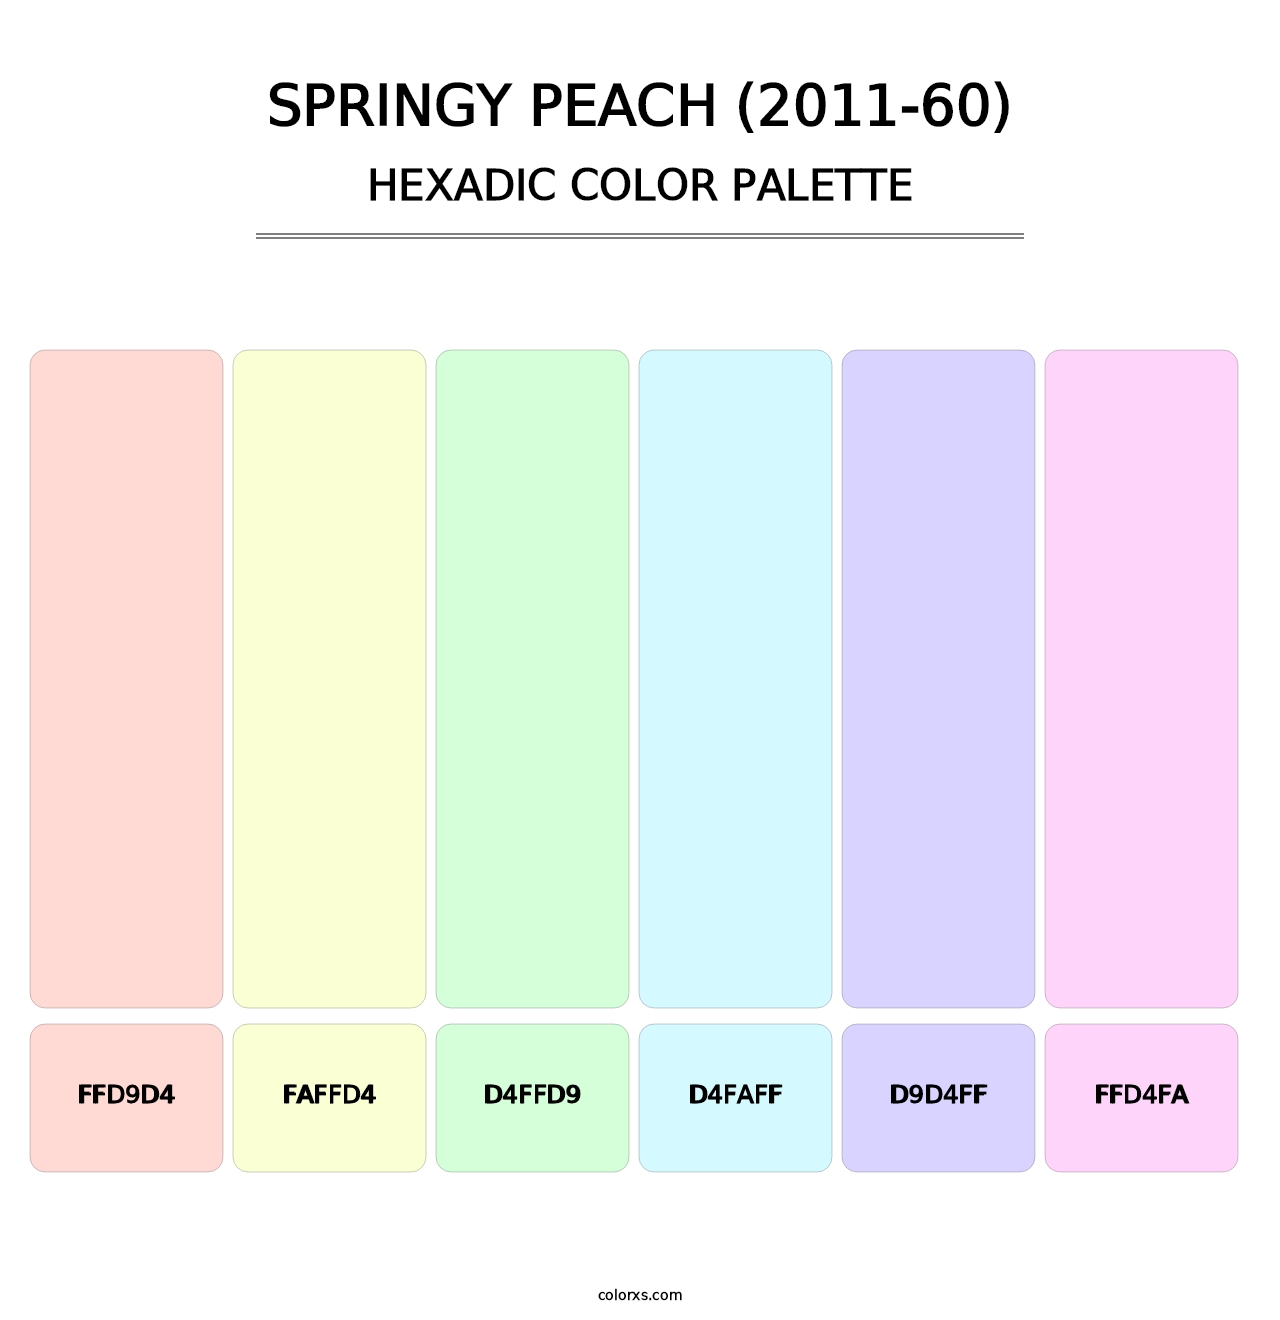 Springy Peach (2011-60) - Hexadic Color Palette